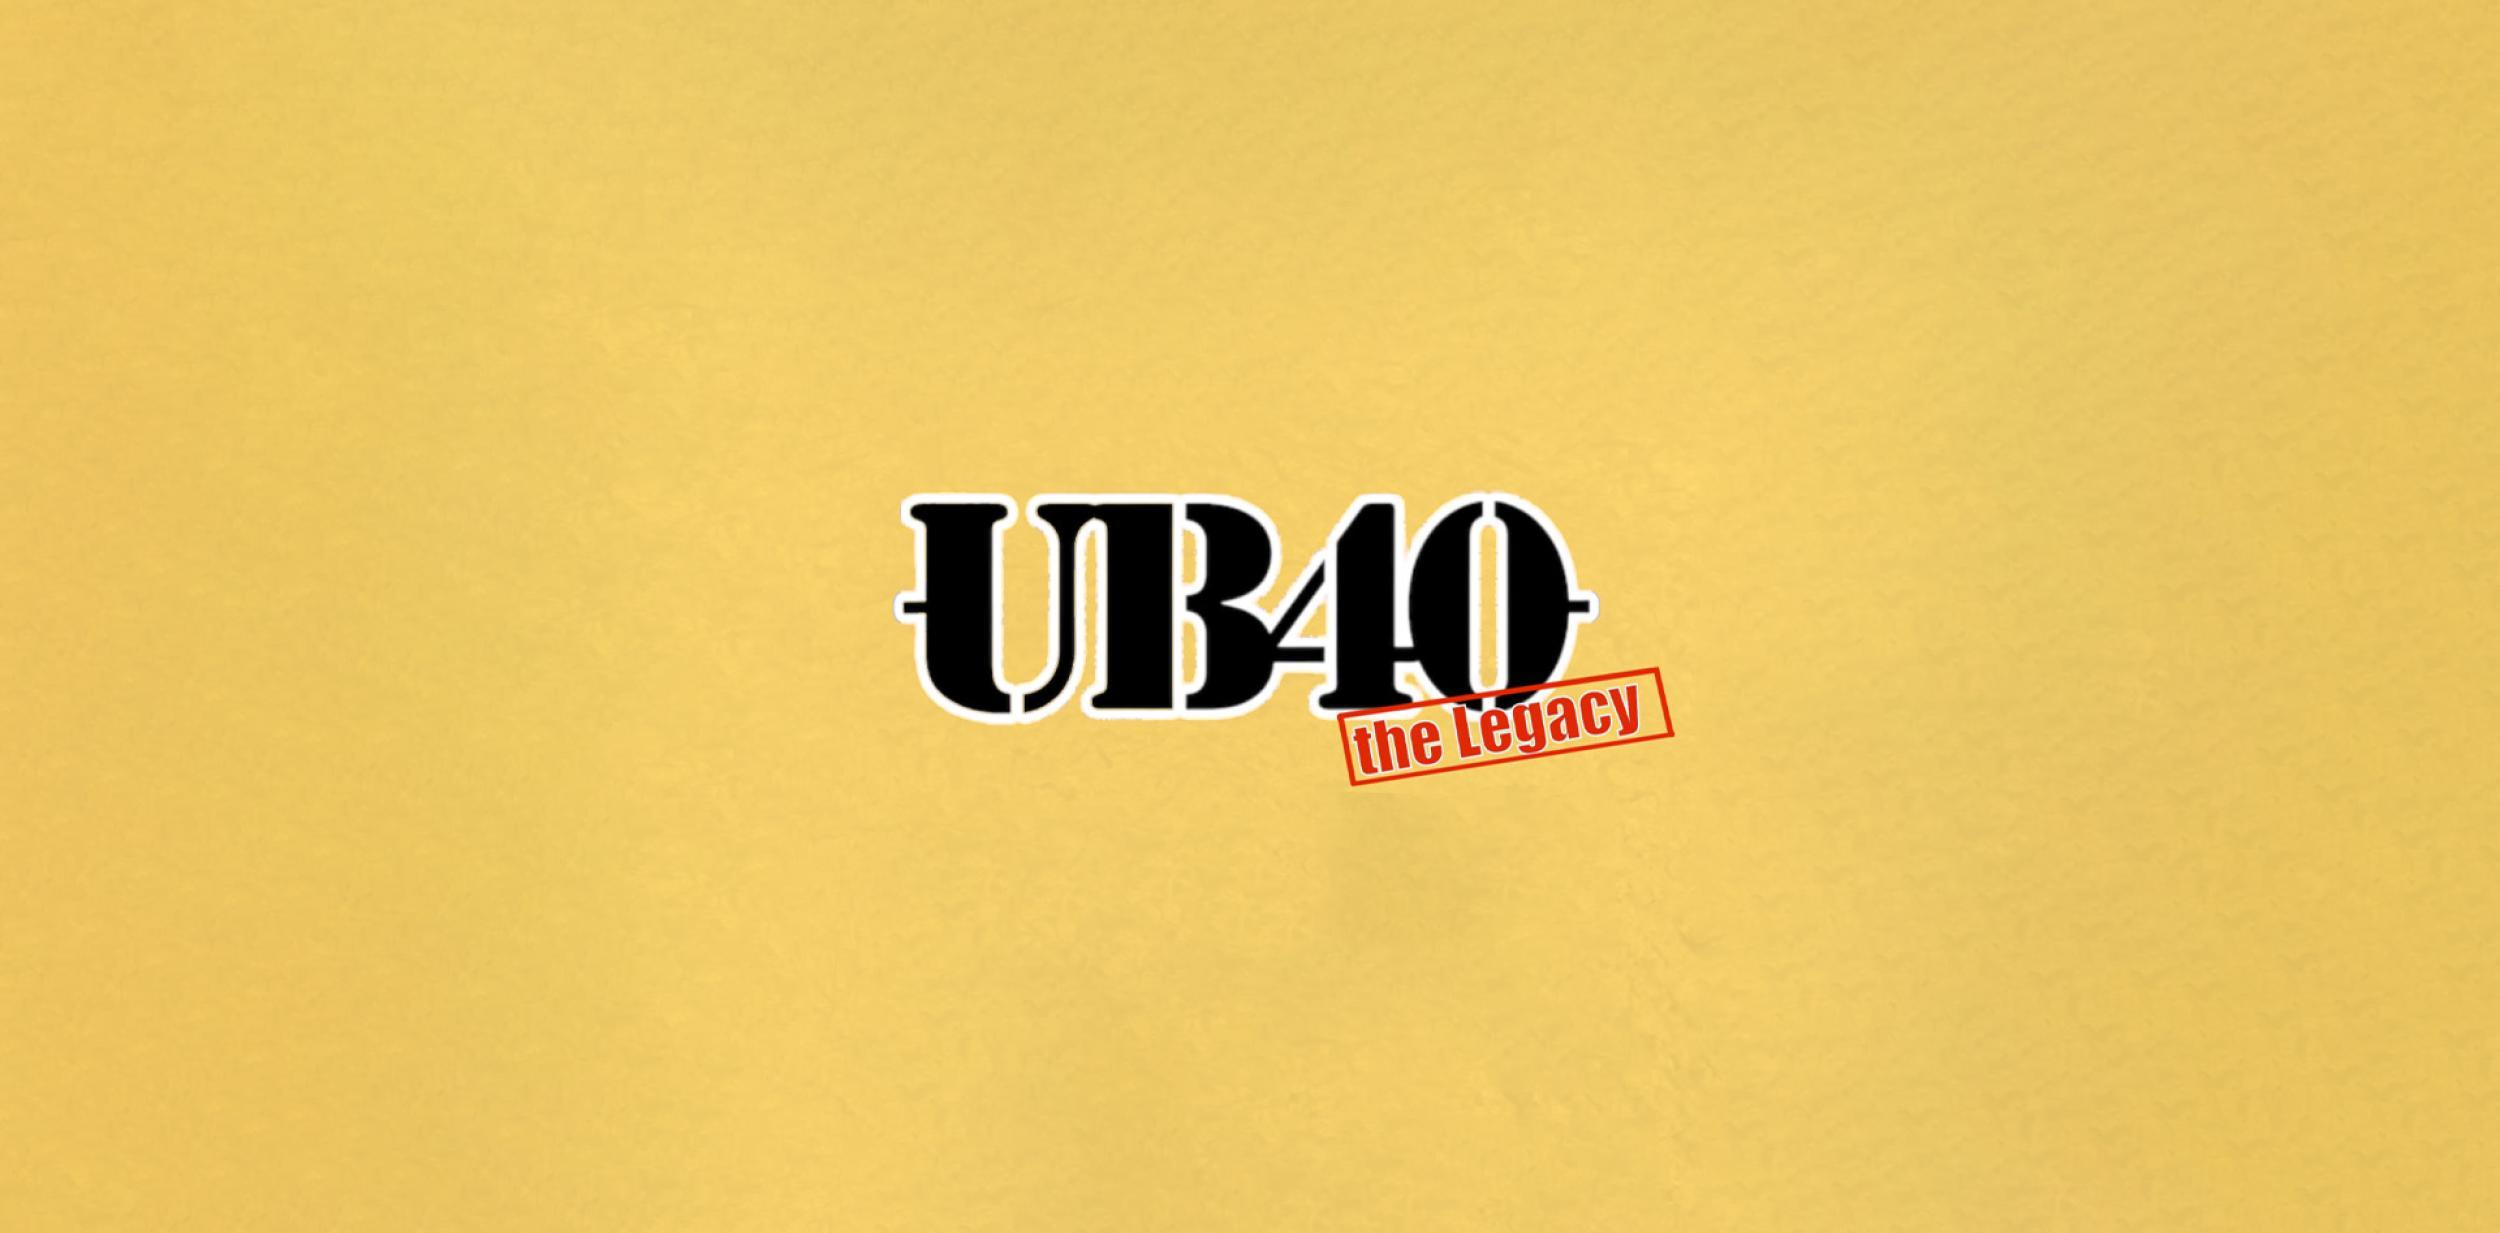 UB40 The Legacy logo